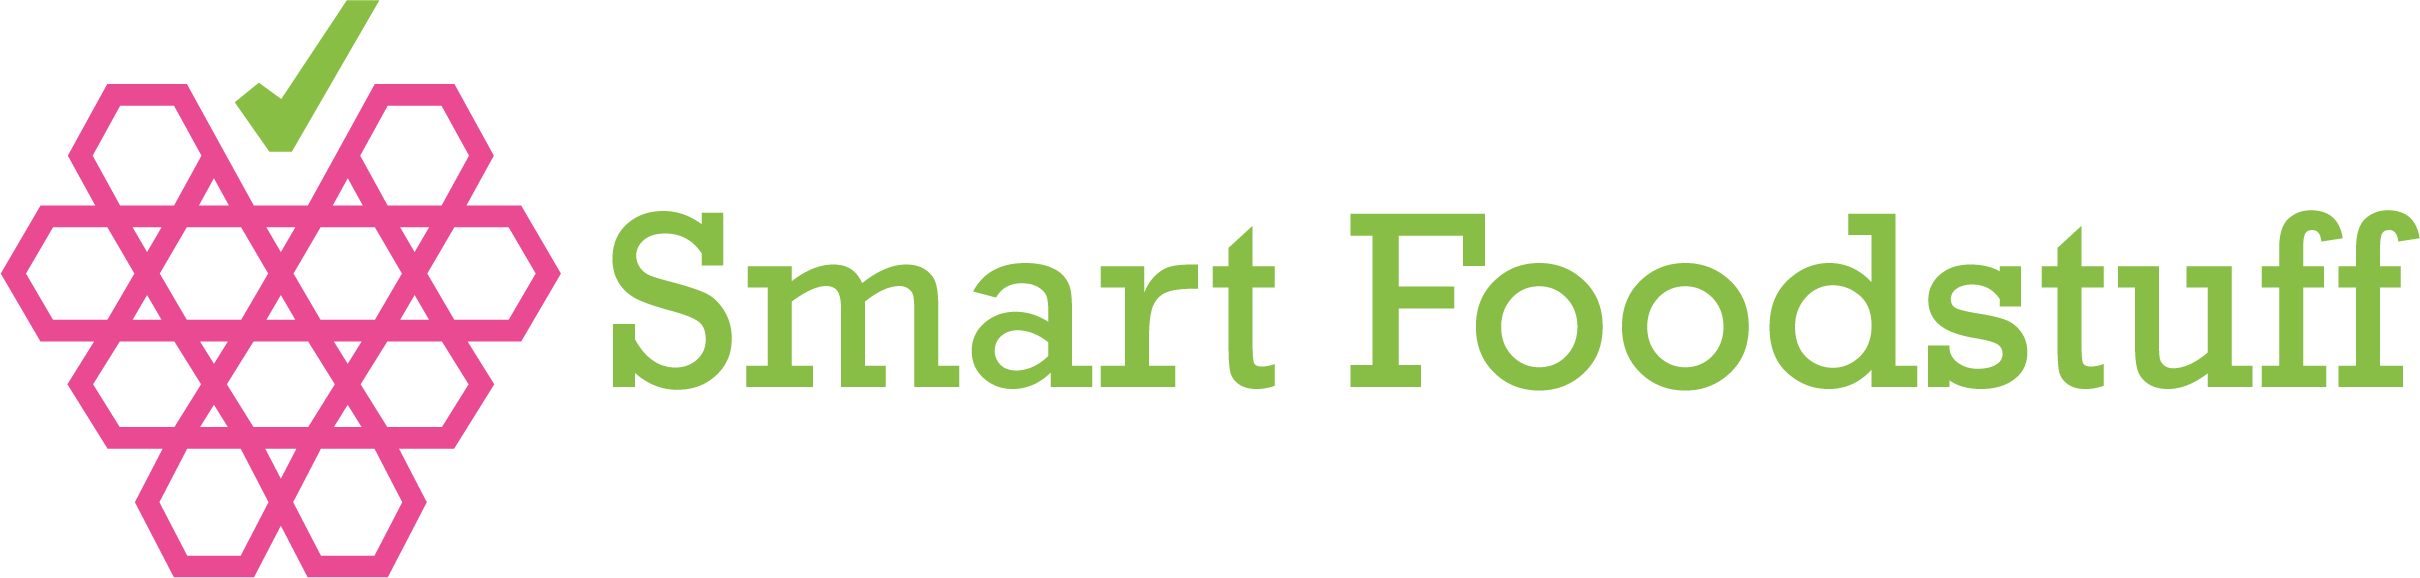 Smart Foodstuff logo